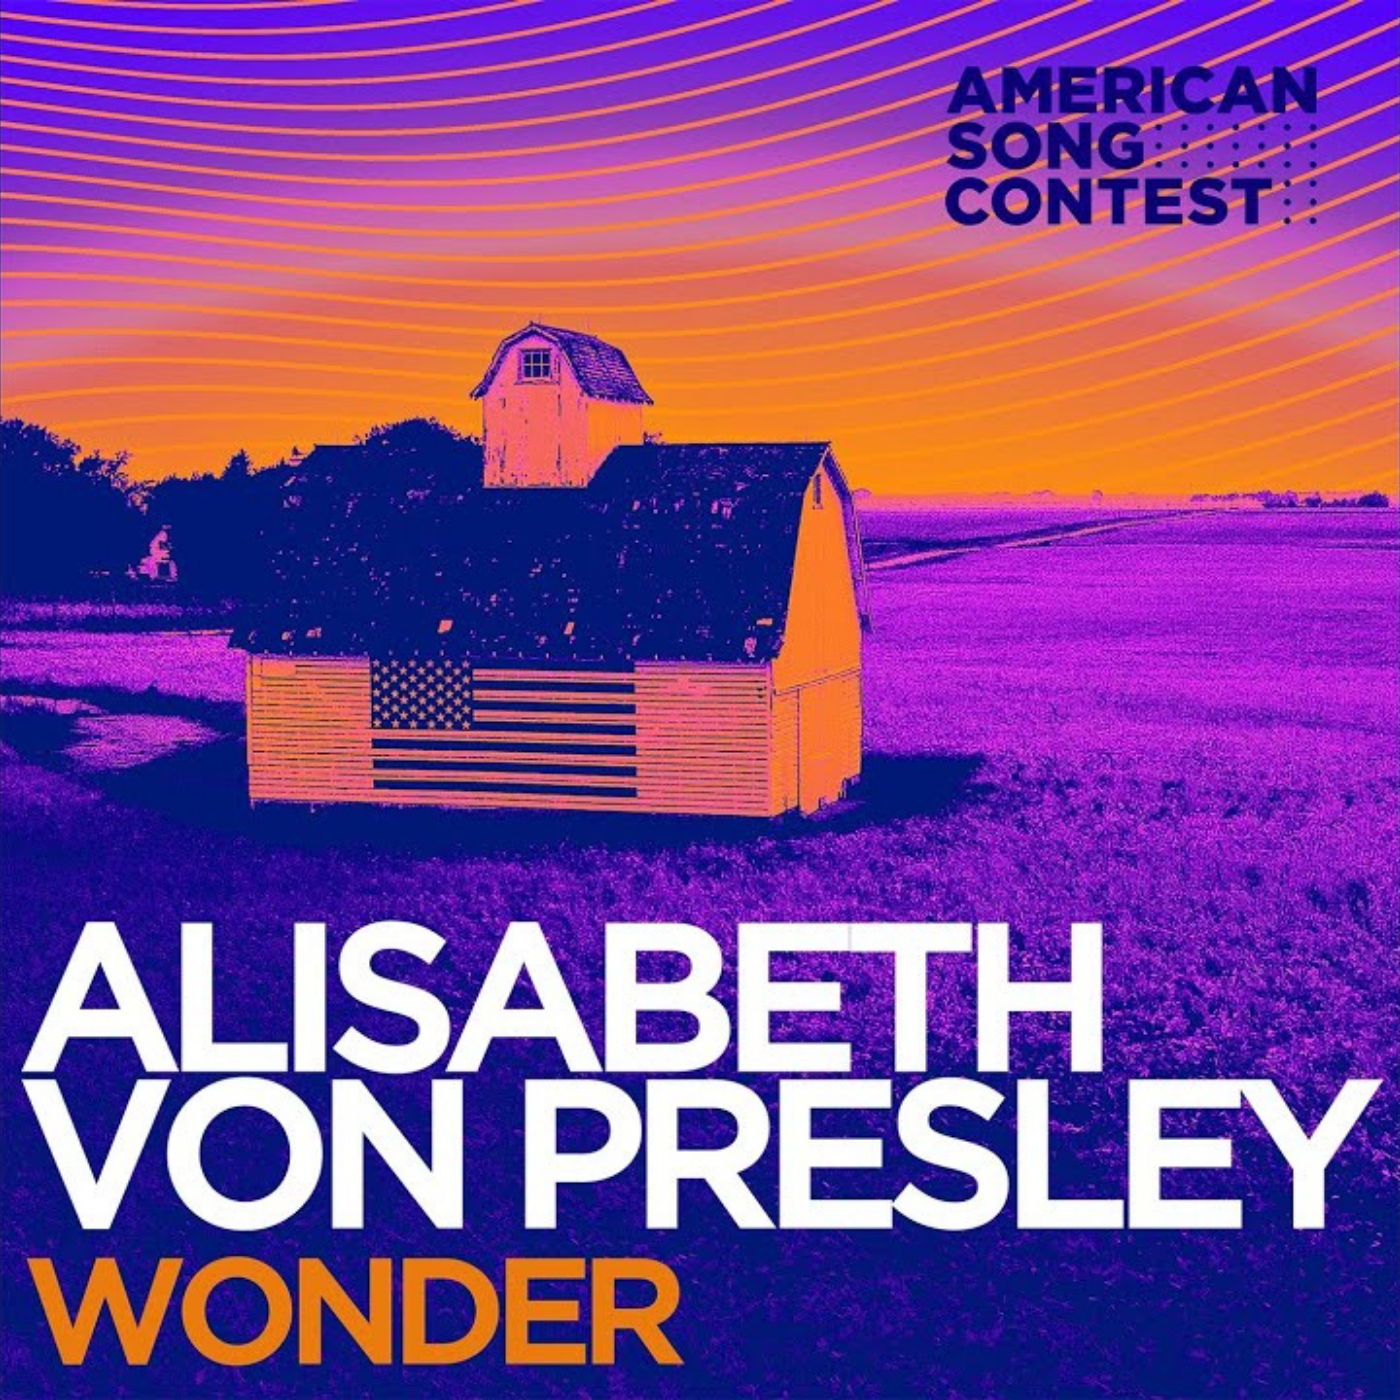 Alisabeth Von Presley Wonder cover artwork